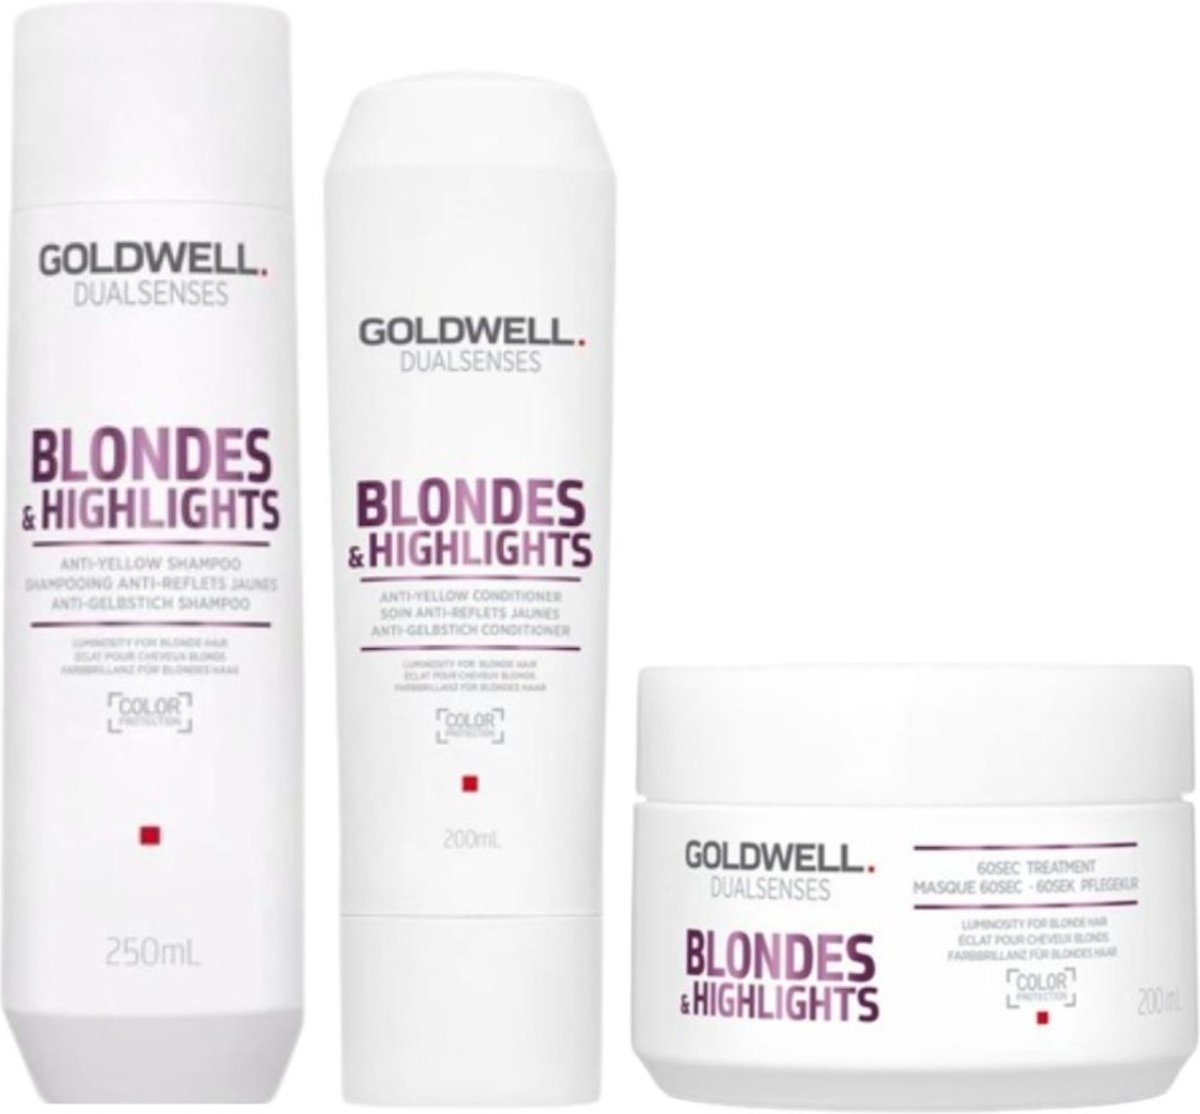 Goldwell - Dualsenses Blondes & Highlights Anti-Yellow XL Set